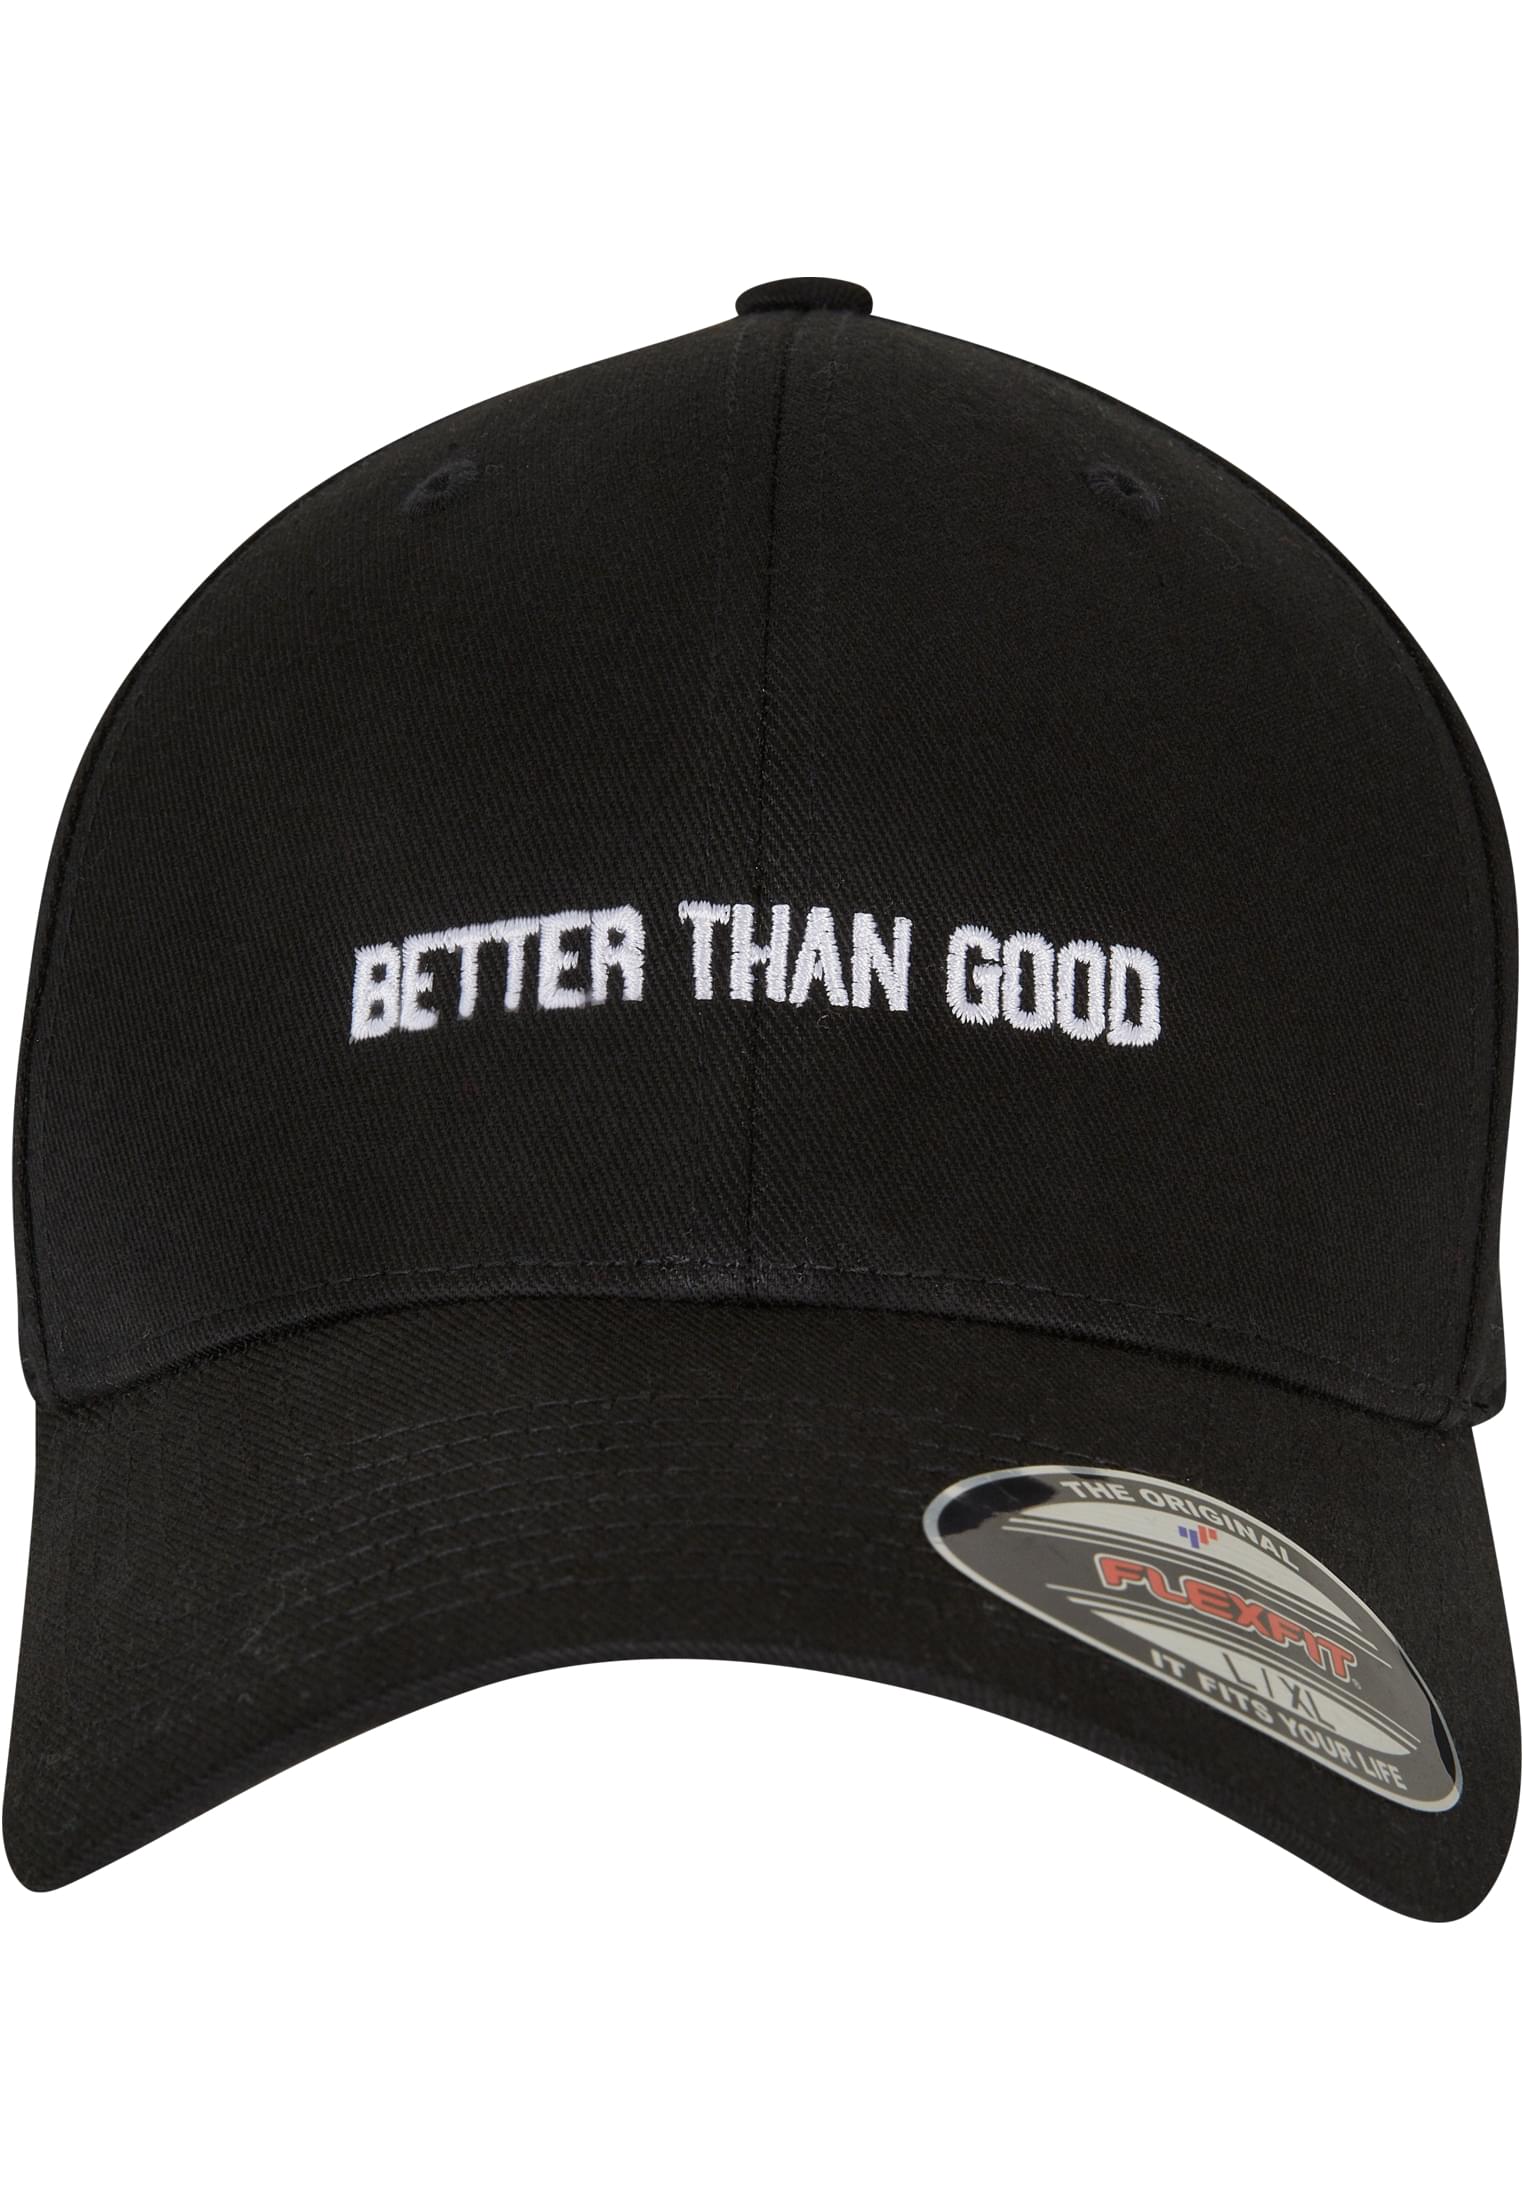 Better than a good Flexfit cap black/white